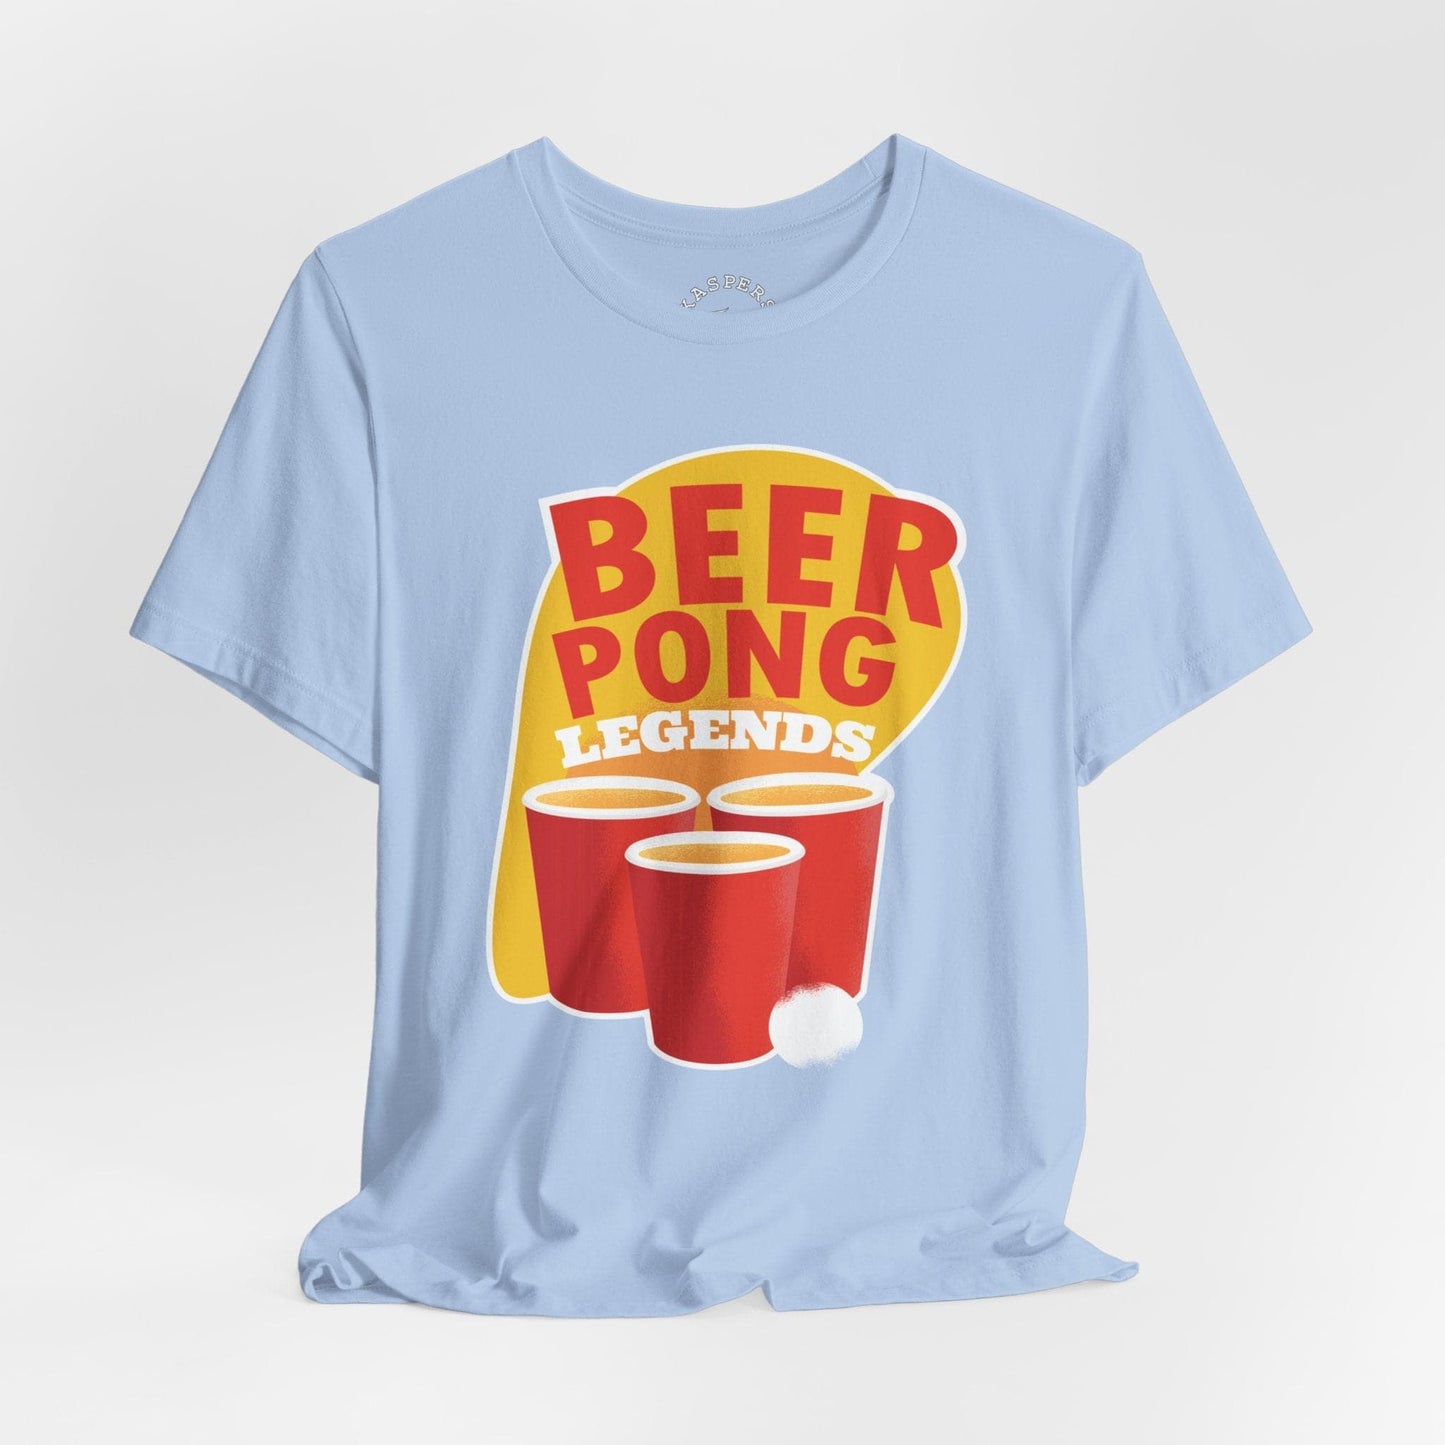 Beer Pong Legends T-Shirt